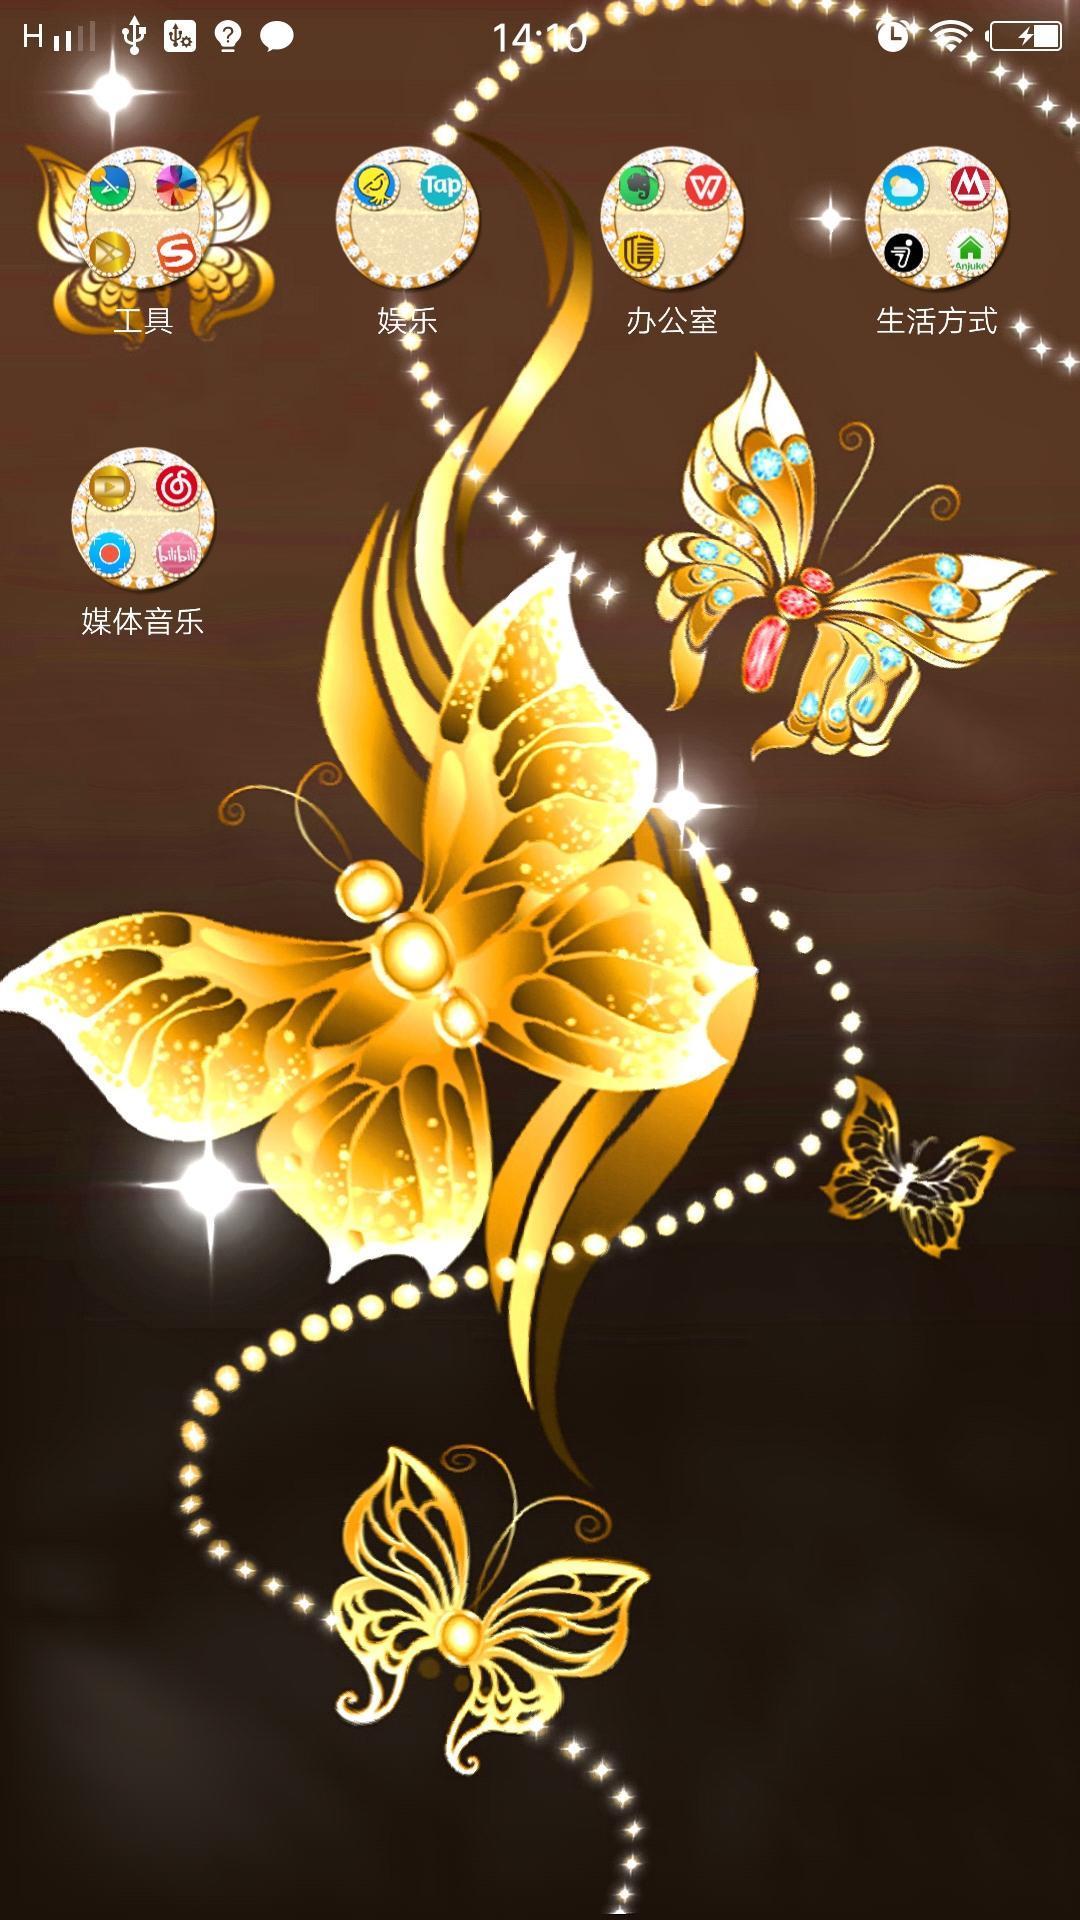 Golden Butterfly wallpaper by S  Download on ZEDGE  7da0